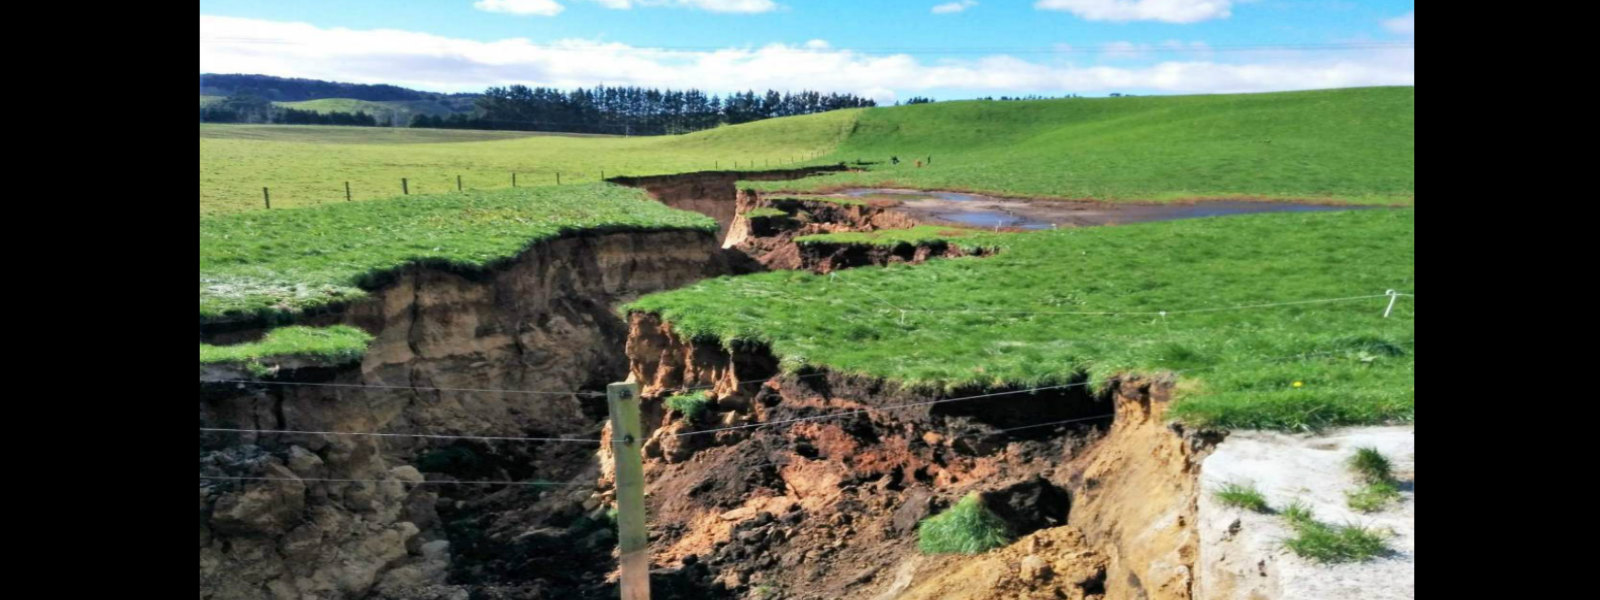 Giant sinkhole opens in New Zealand